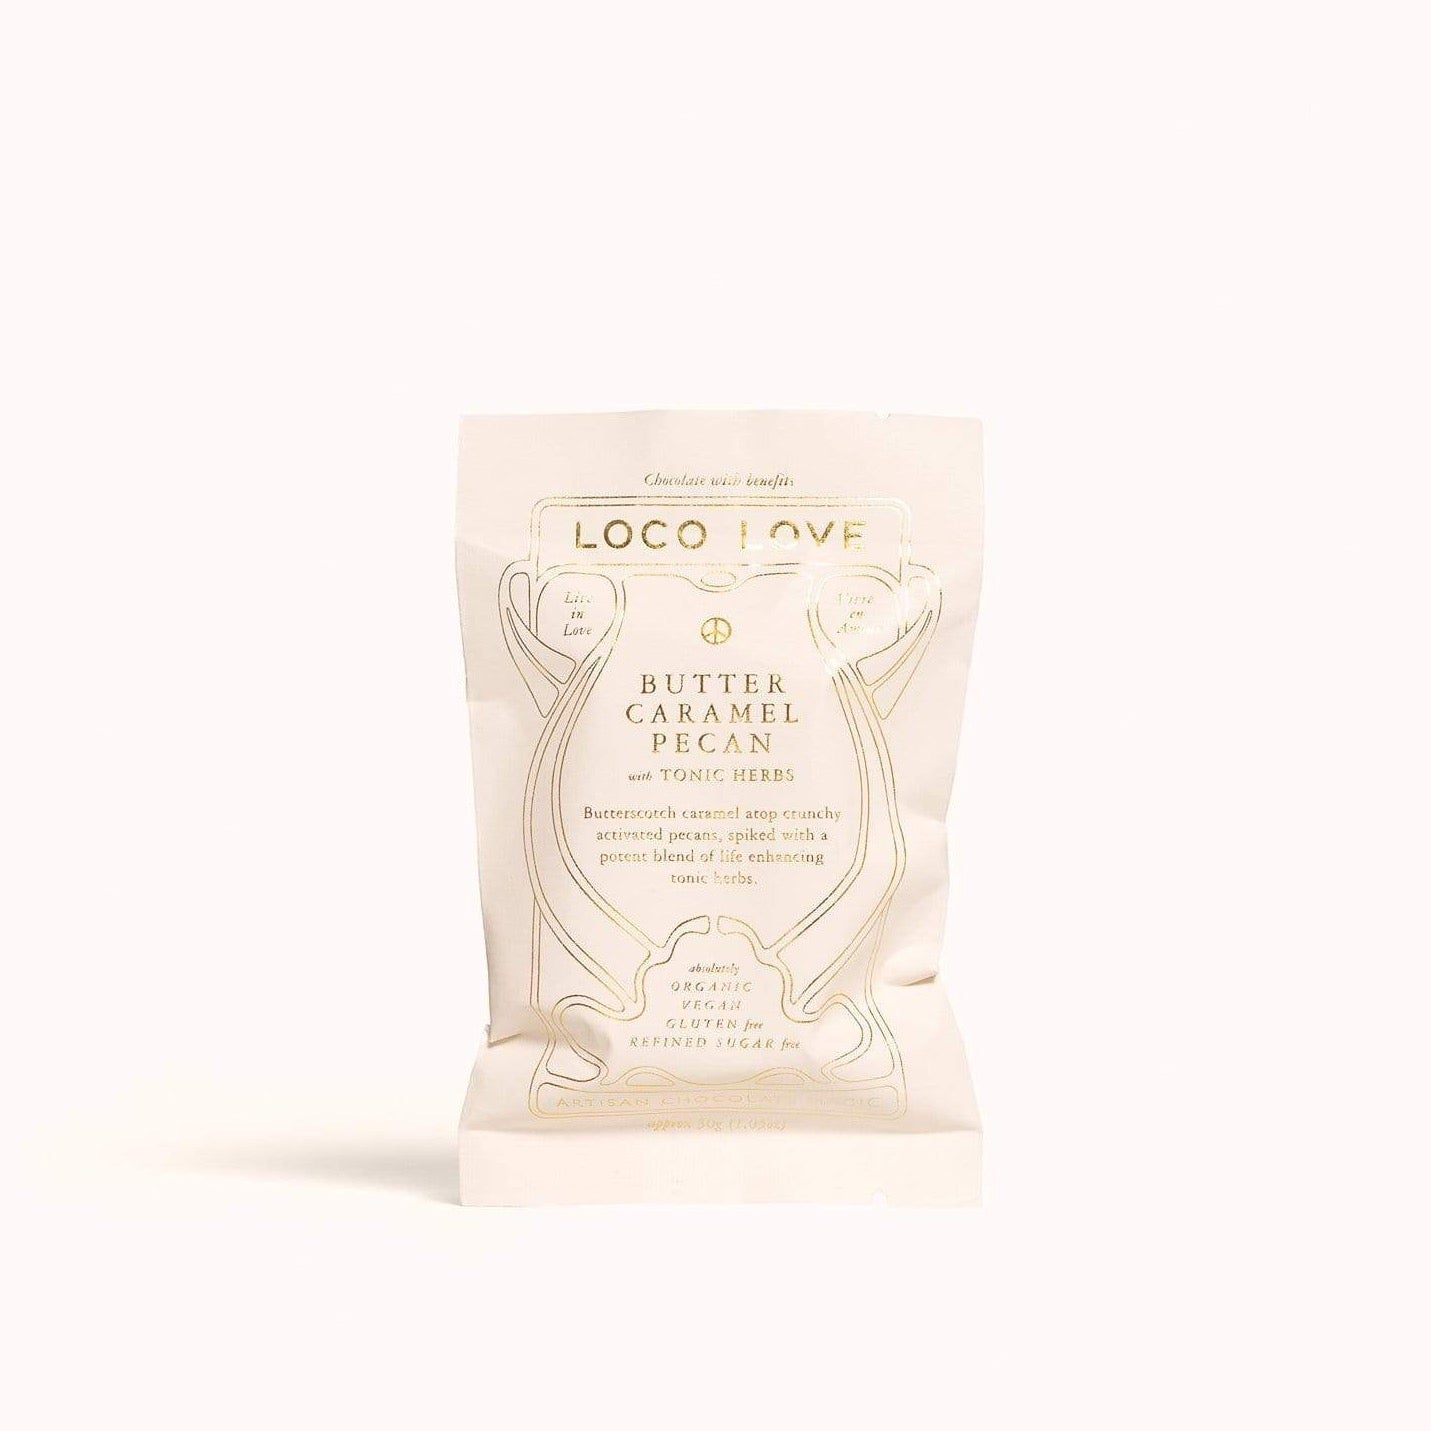 butter caramel pecan chocolate Single by Loco Love